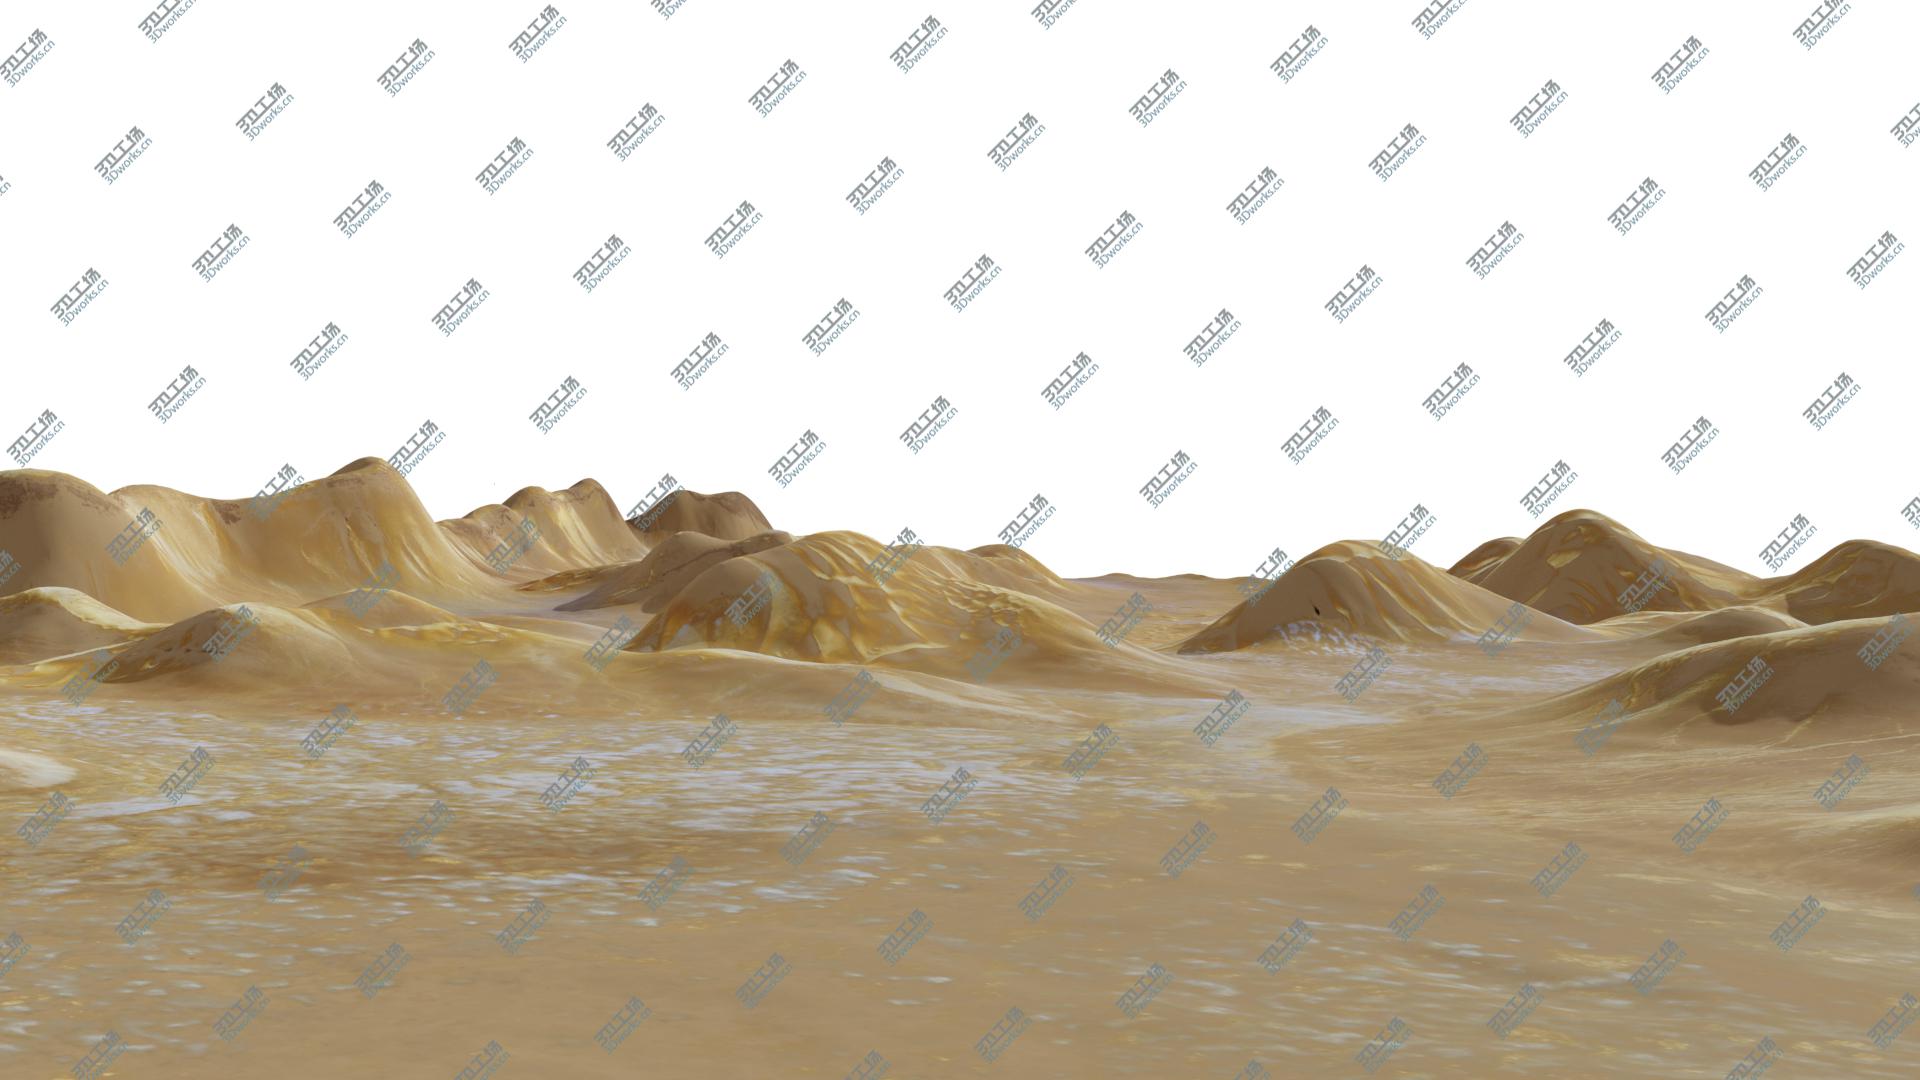 images/goods_img/202104091/Photorealistic Desert Valley and Mountain Range model/4.jpg